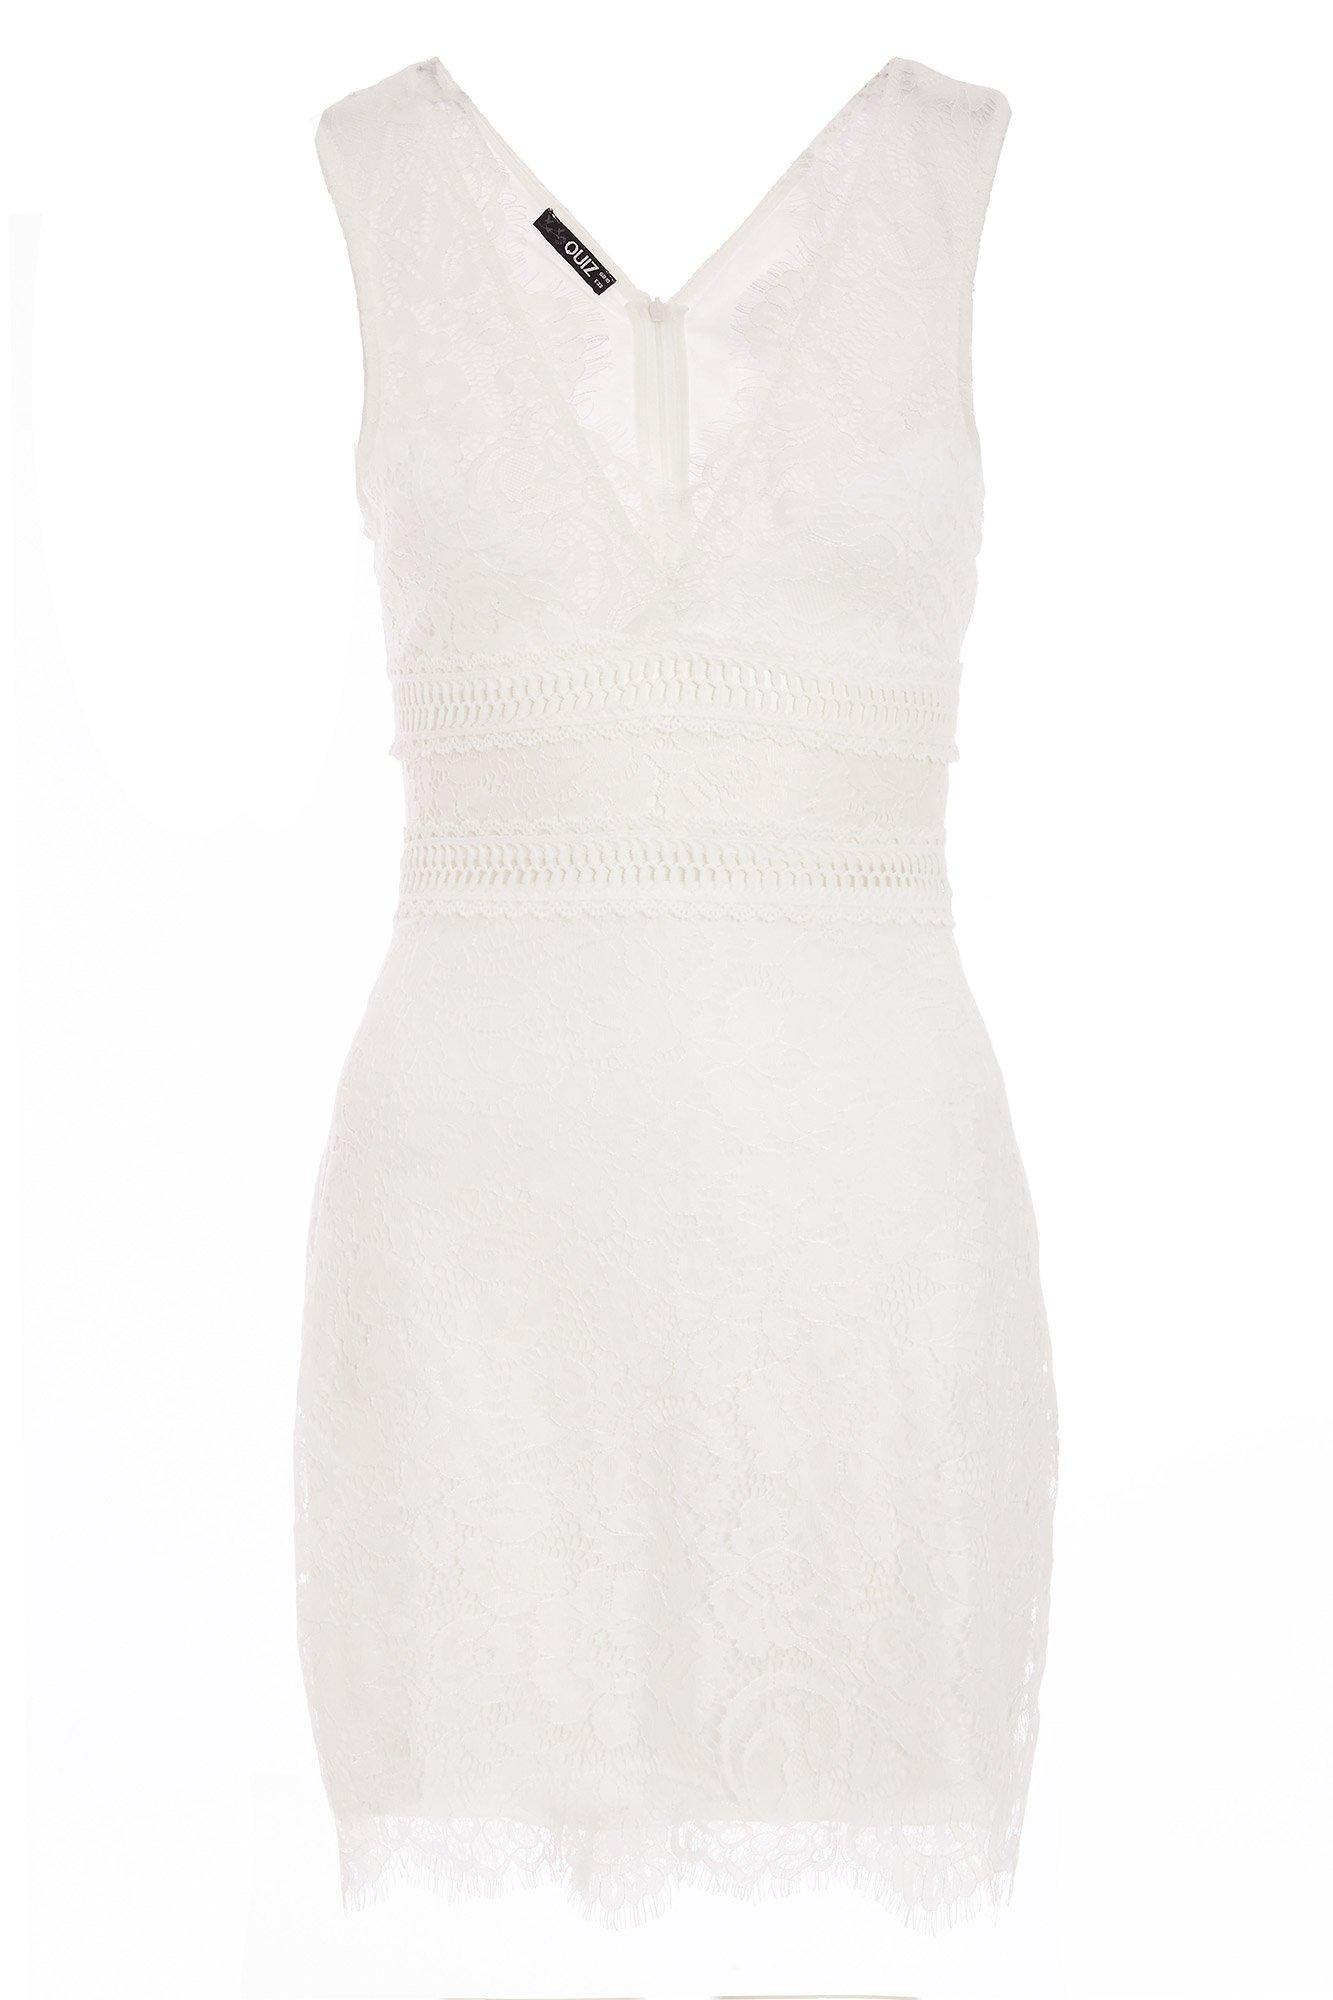 White Lace V Neck Bodycon Dress - Quiz Clothing